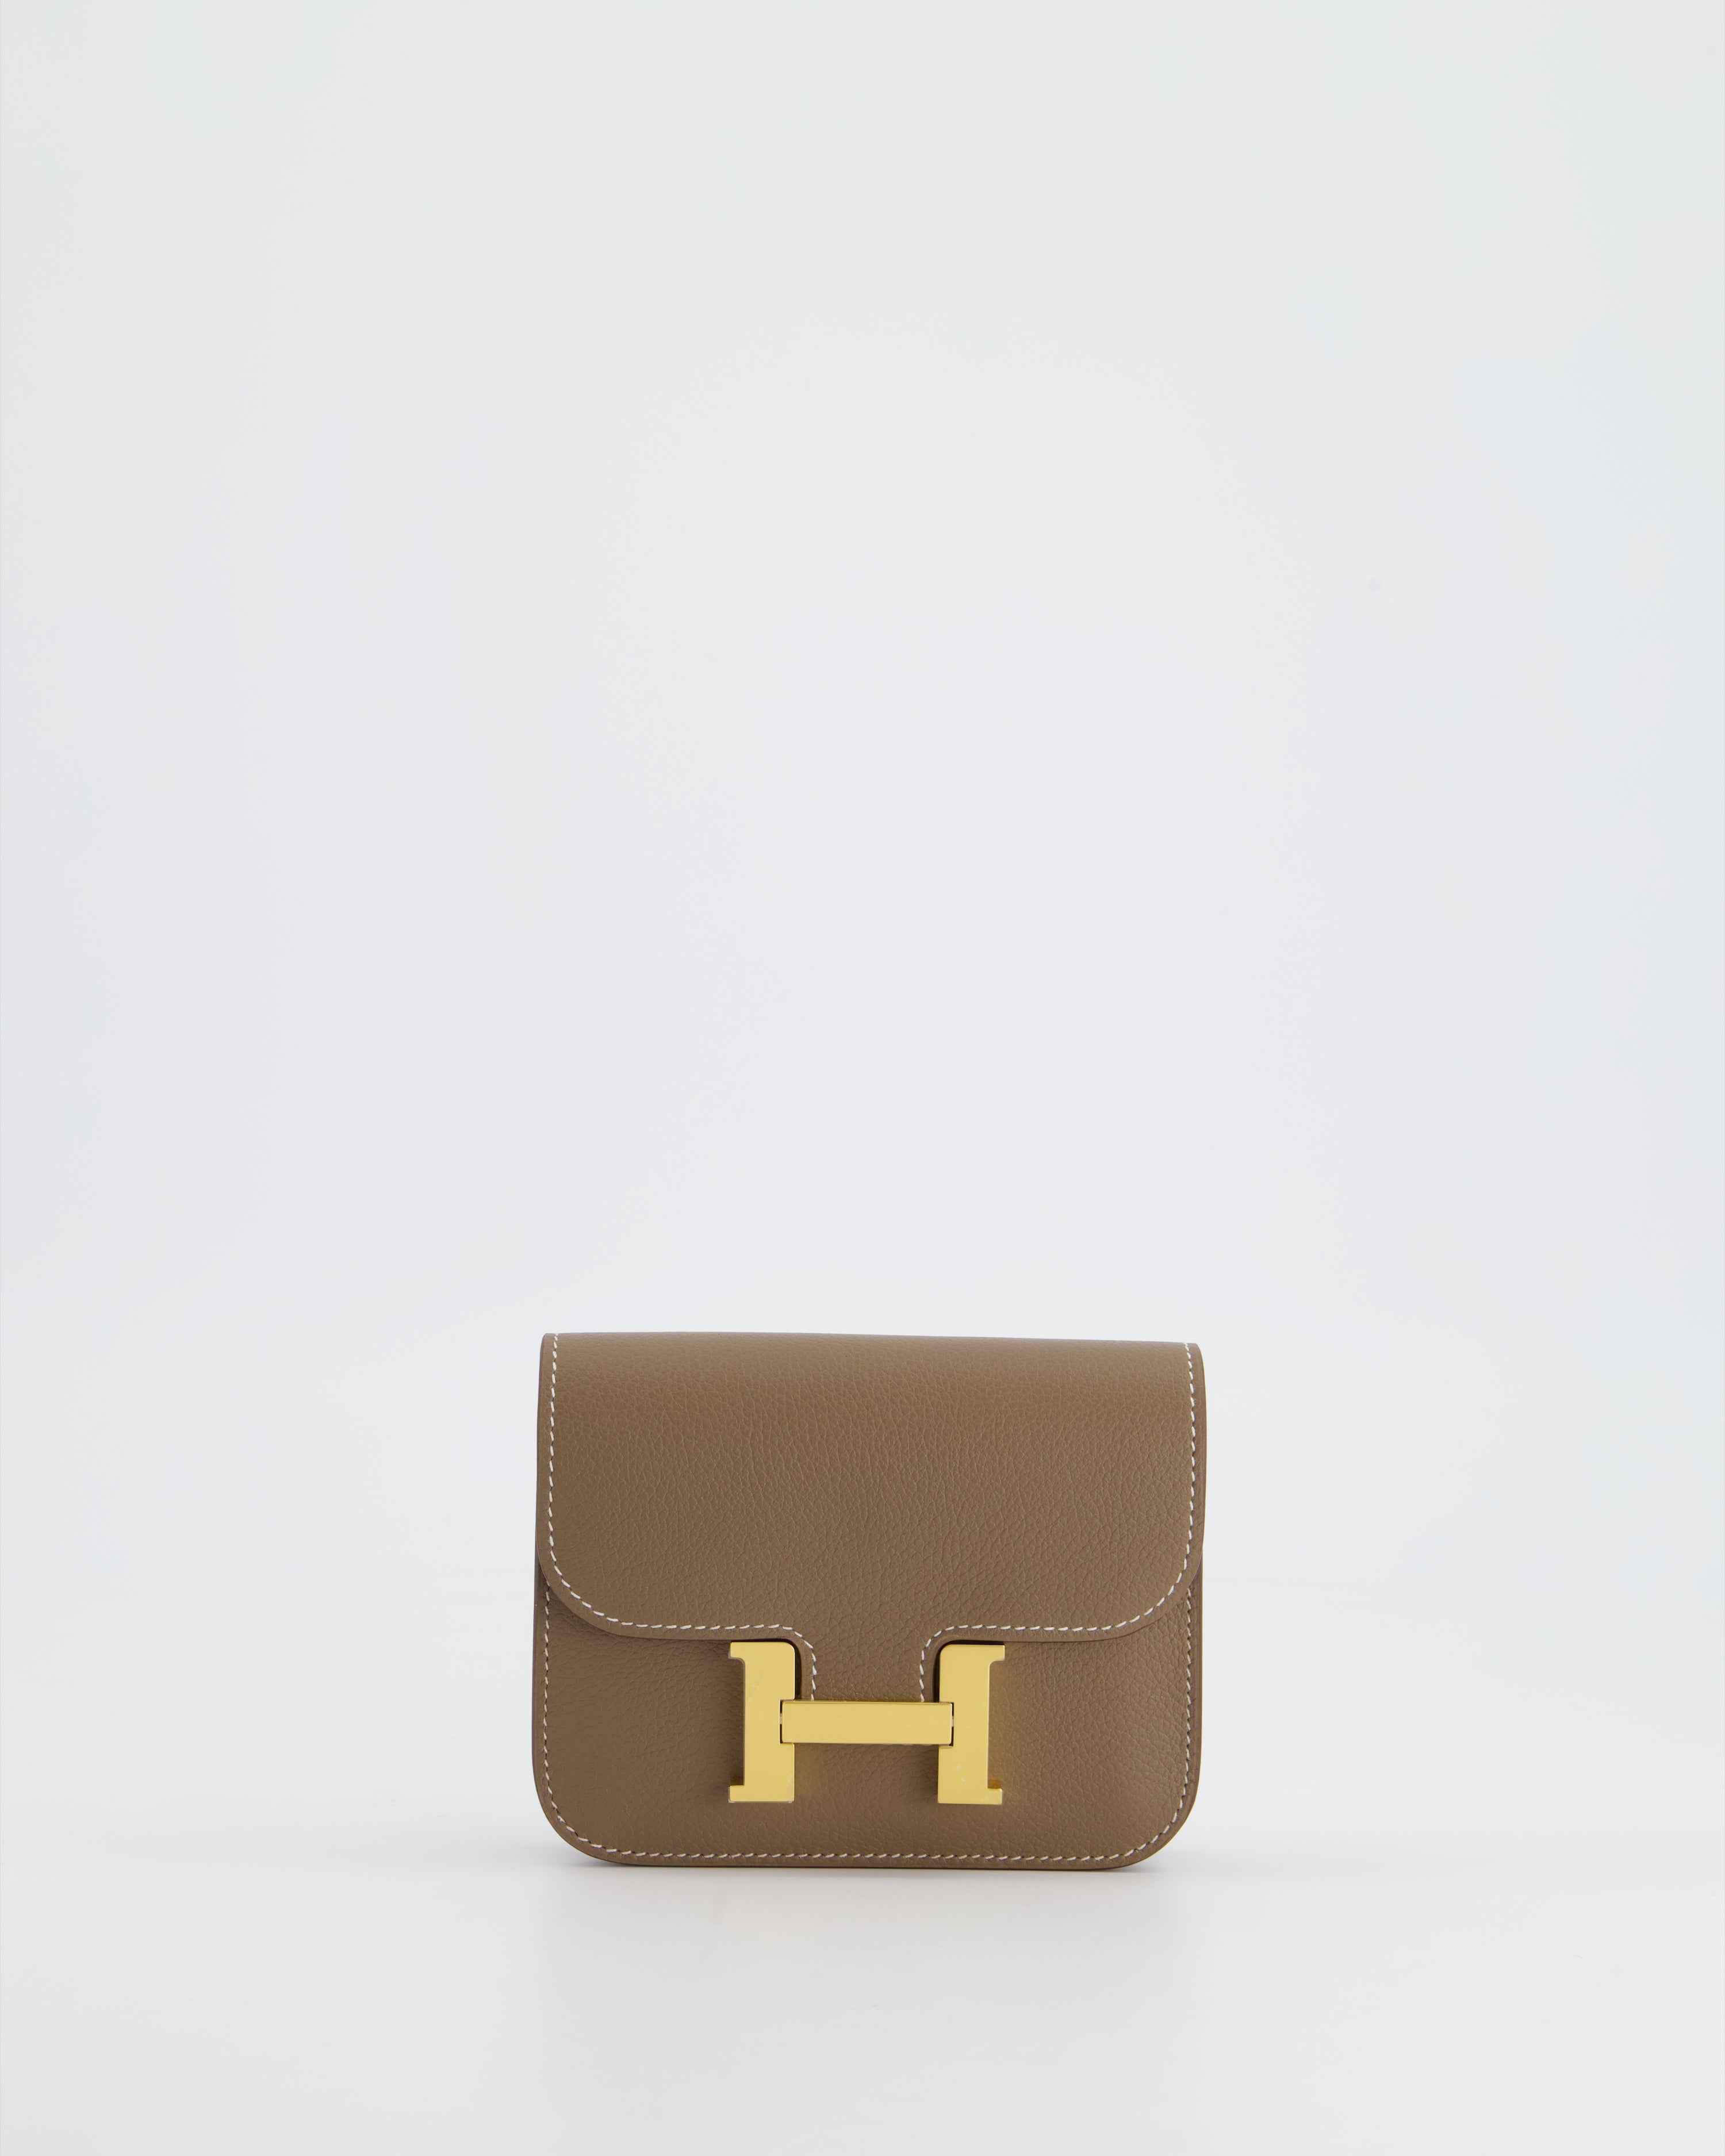 Hermes Kelly 28cm Bag Togo Calfskin Leather Gold Hardware, Etoupe